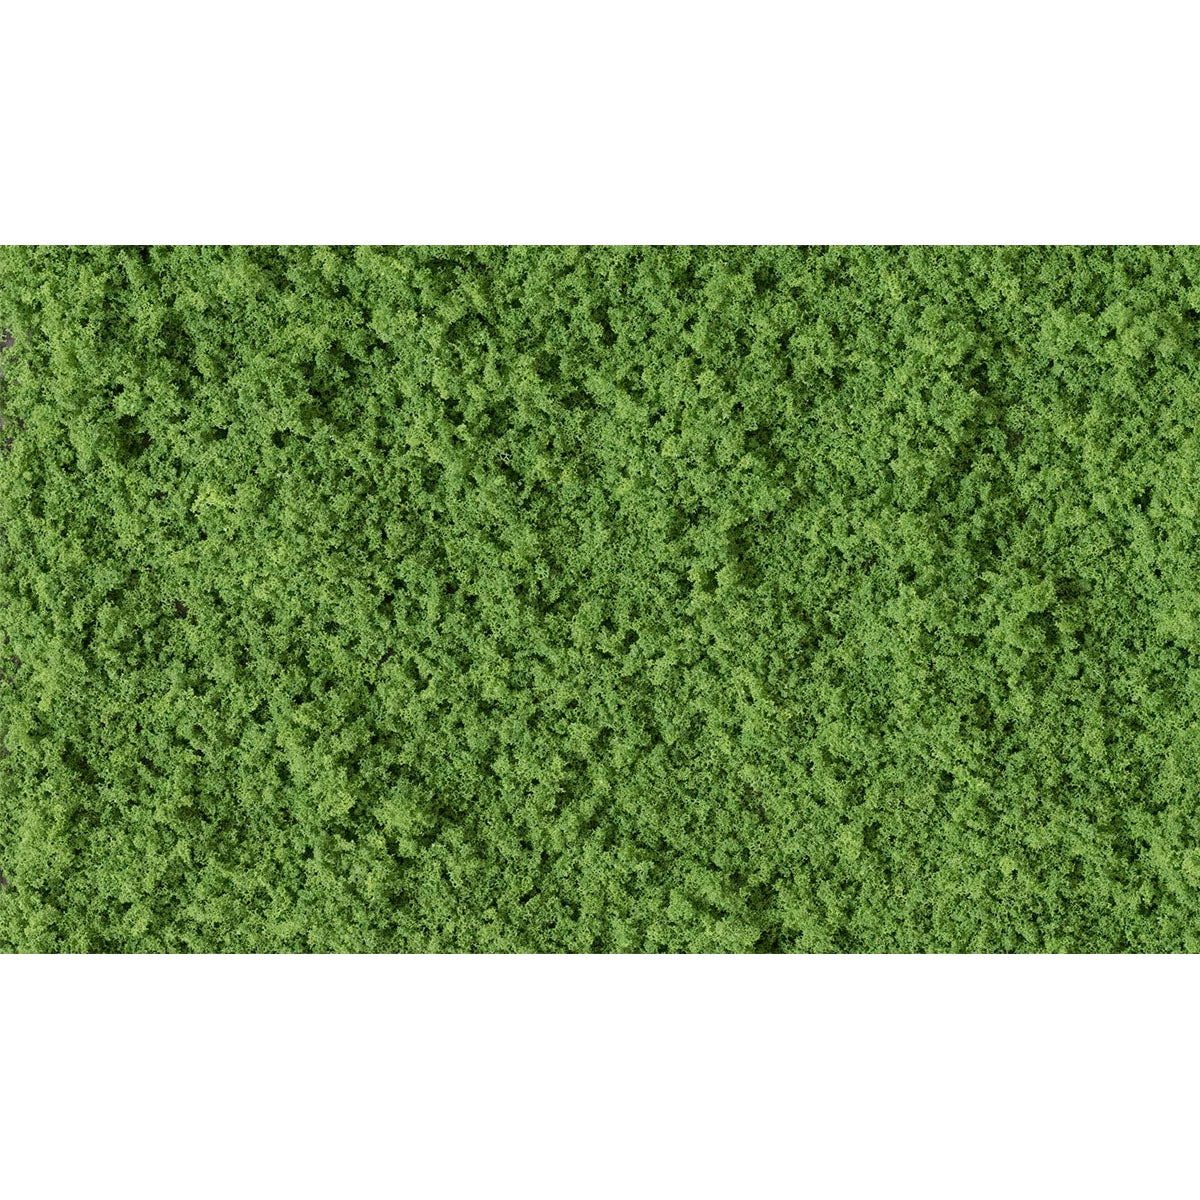 Woodland Scenics Shaker Turf/Medium Green coarse